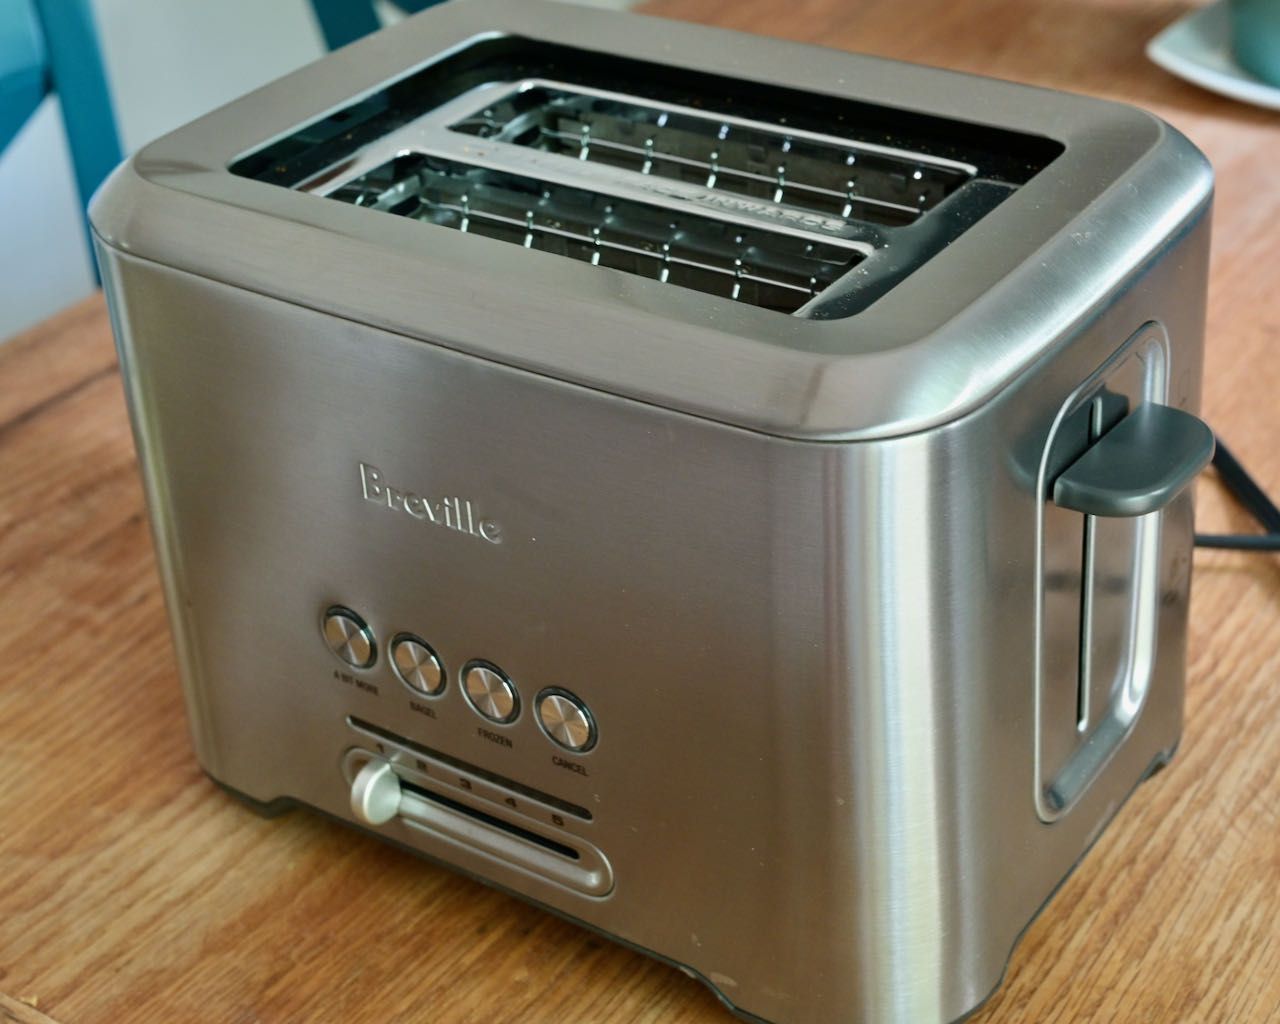 A shiny Breville toaster